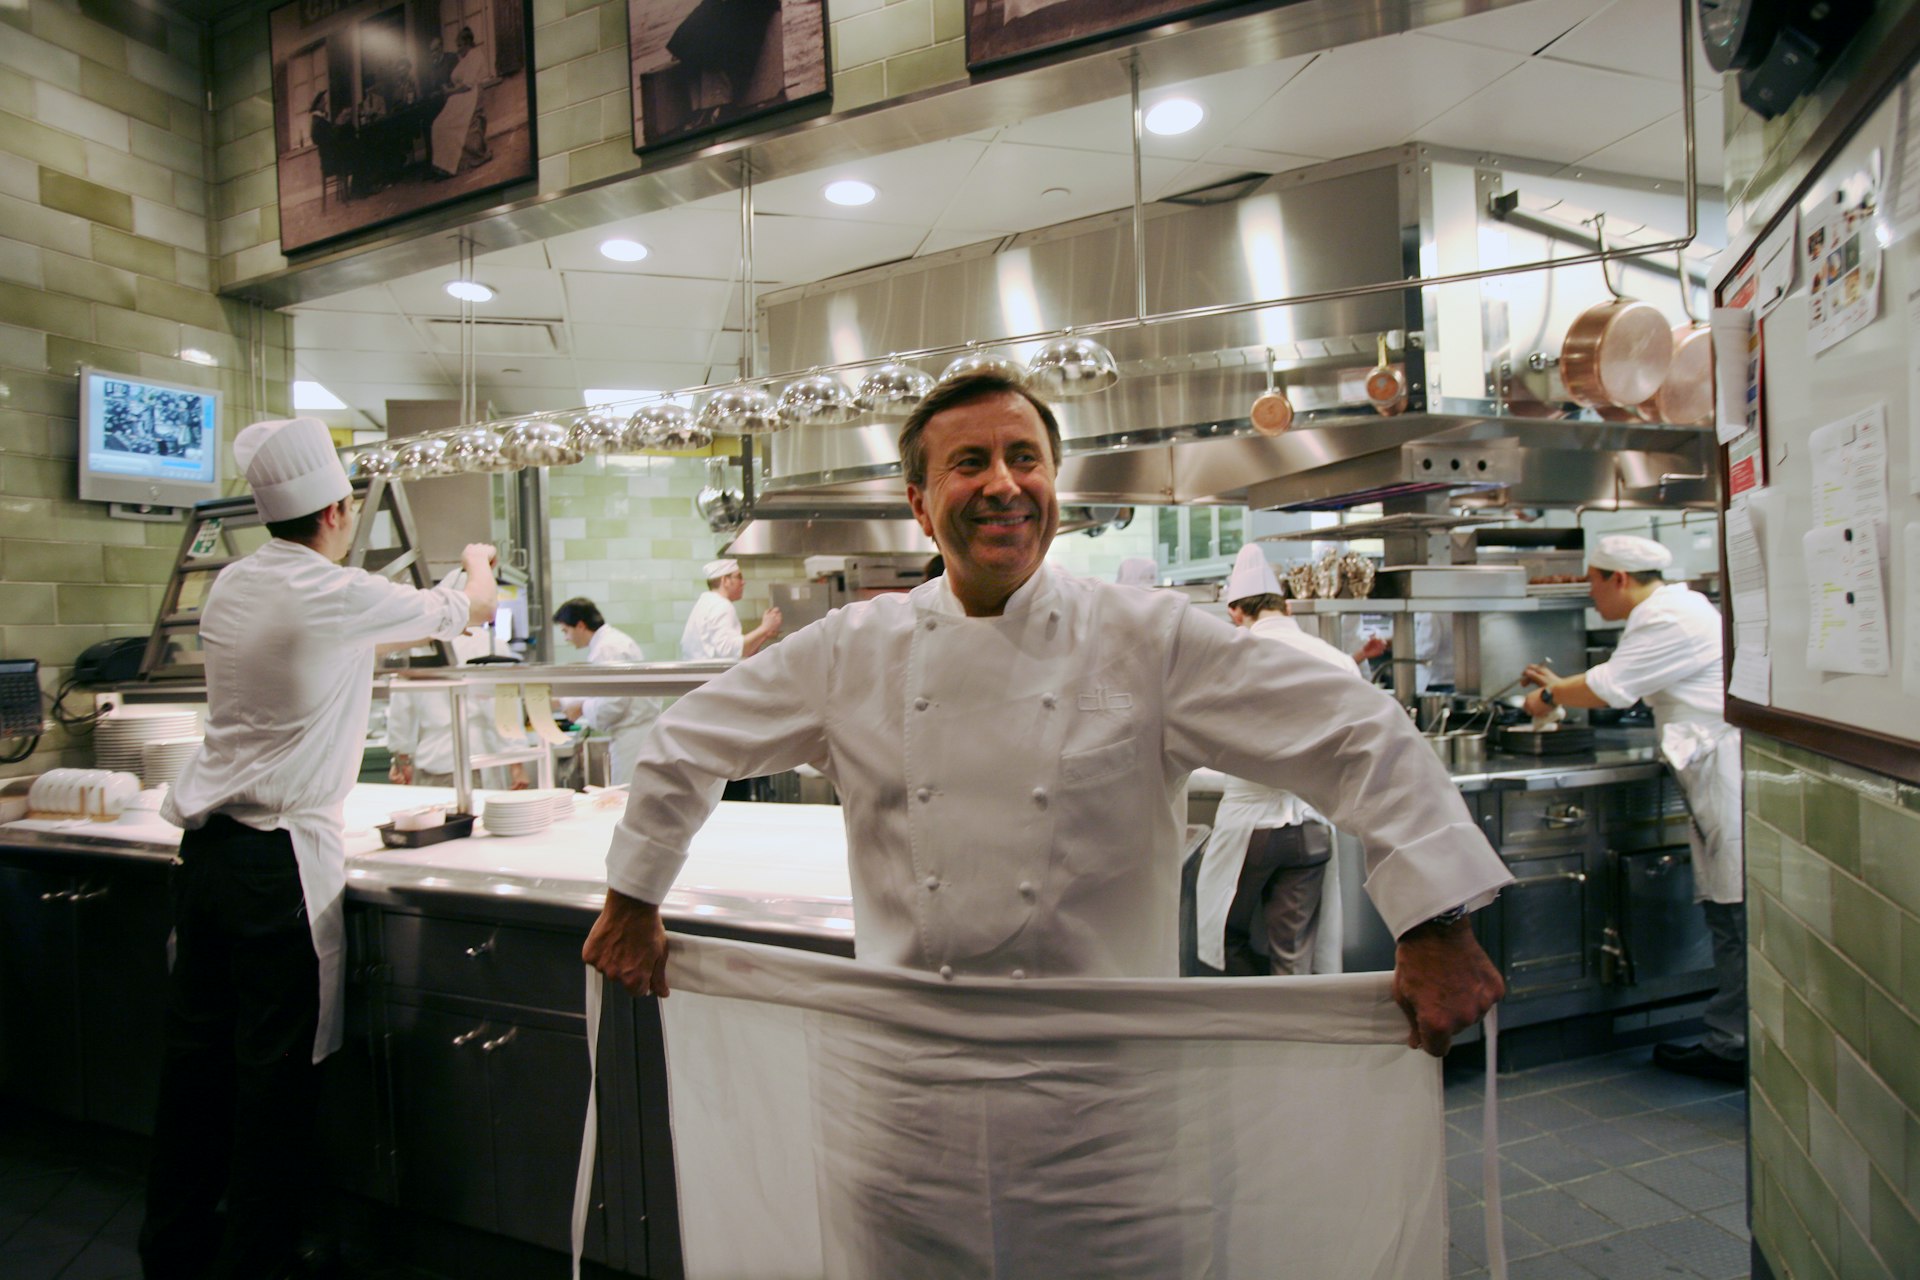 Three Star Chef Daniel Boulud in the kitchen of his Restaurant Daniel, in New York